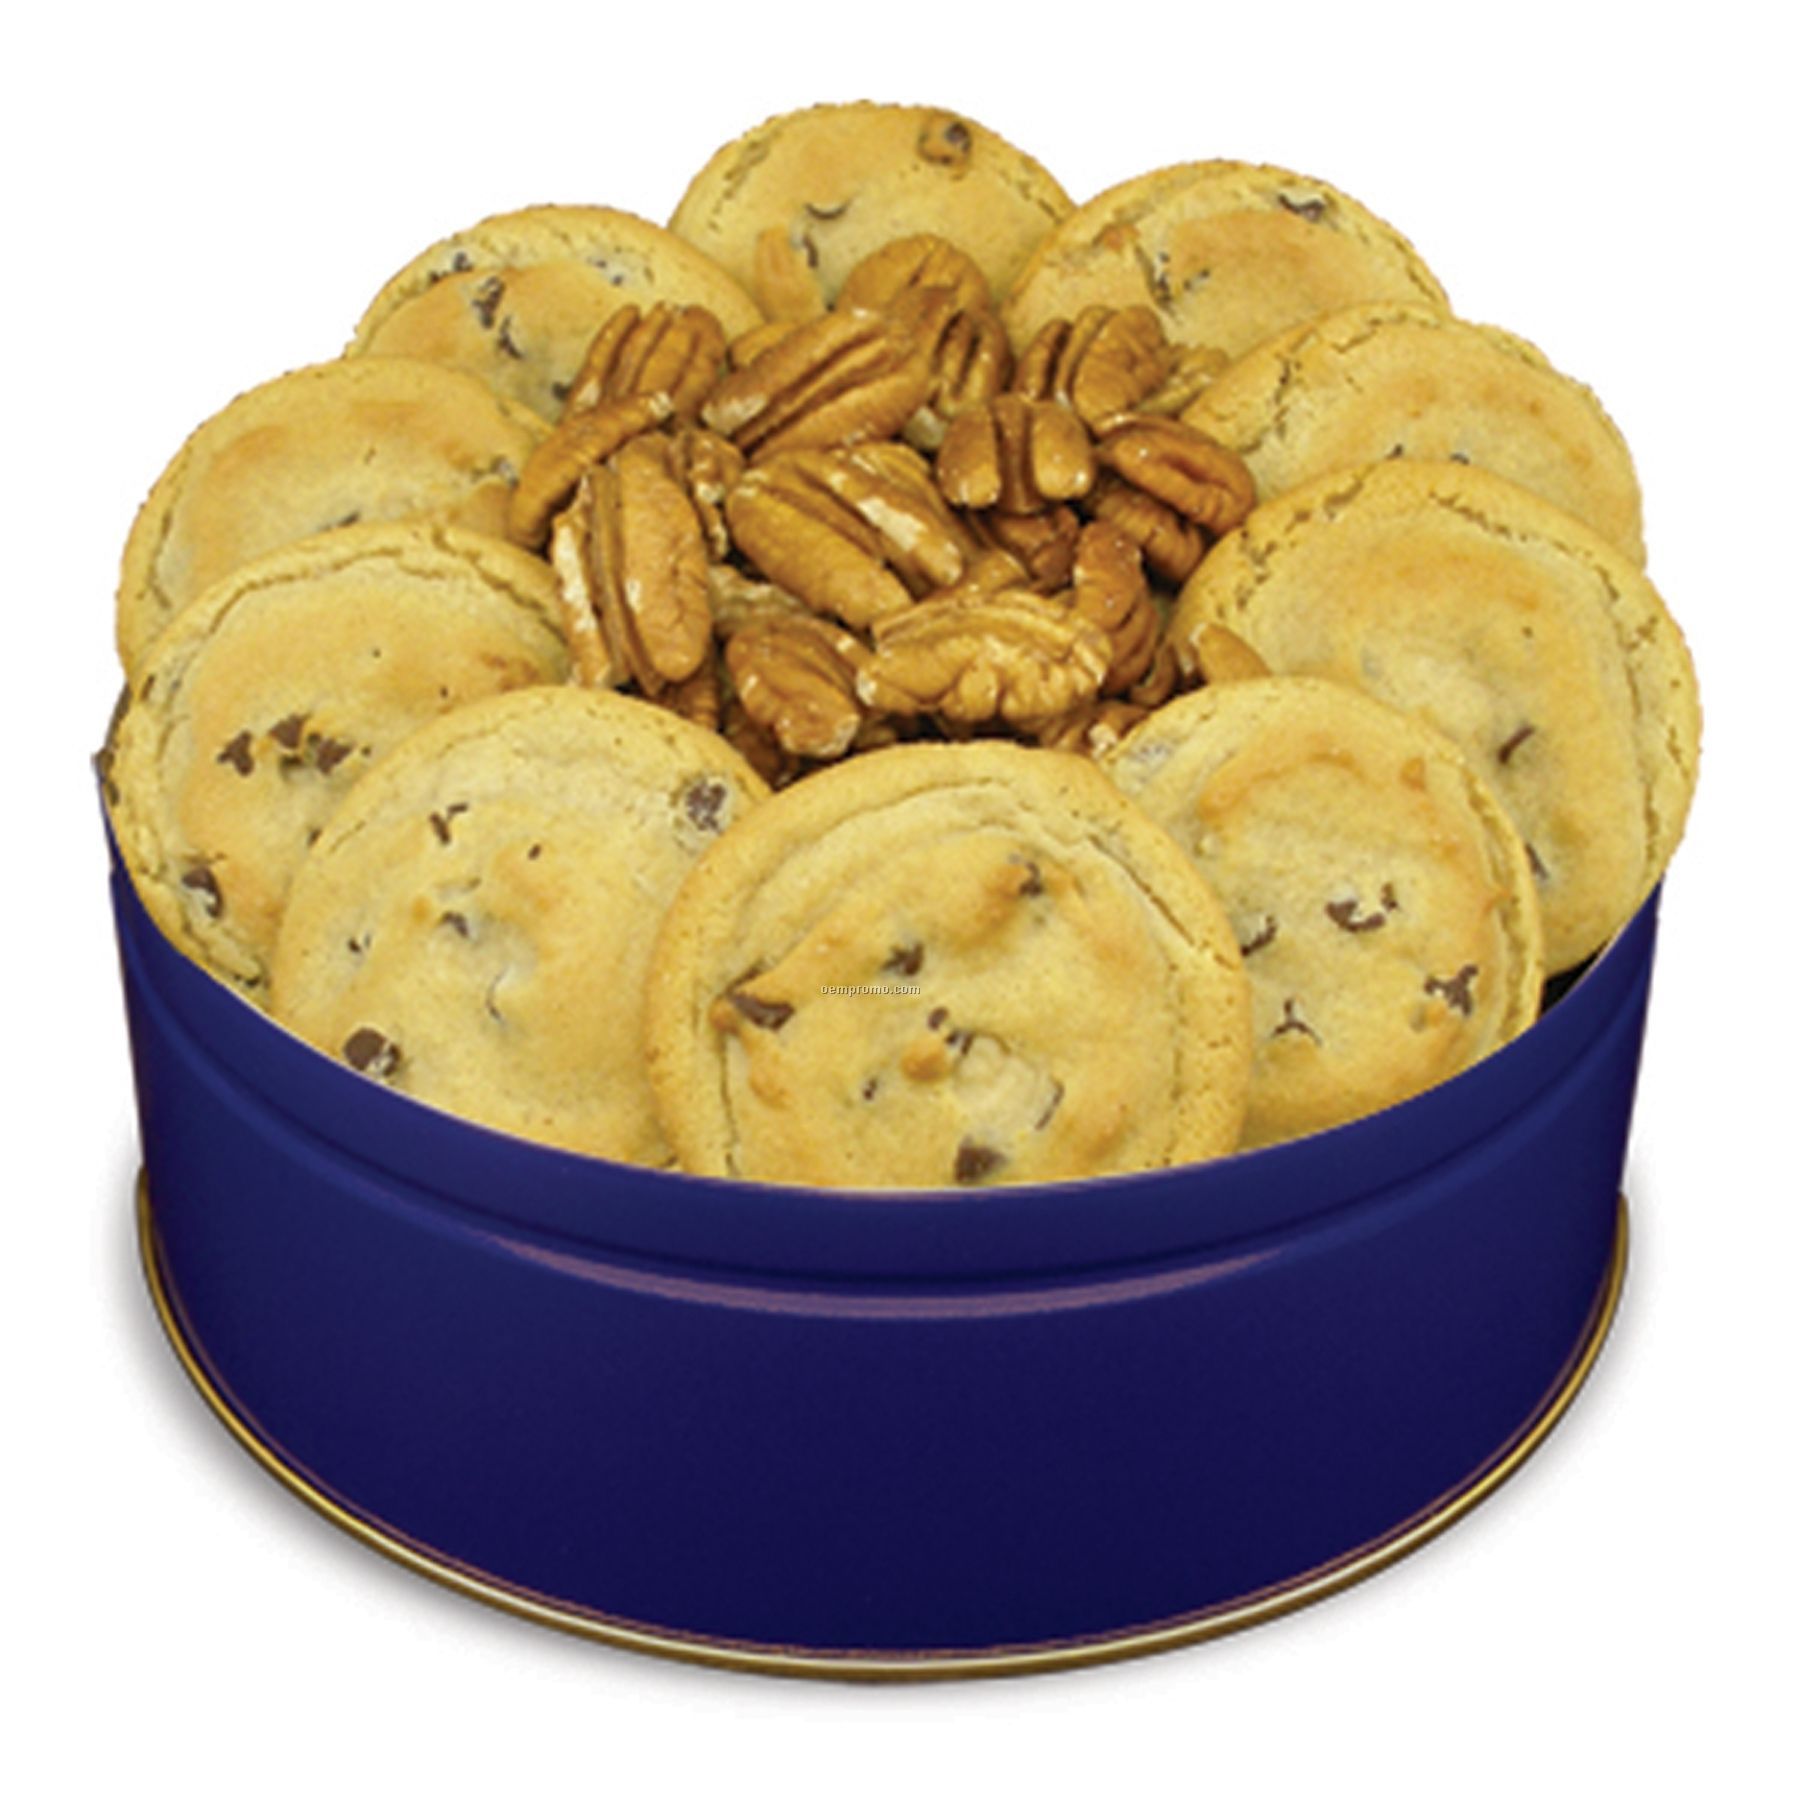 Cookie Nut Combos - 10 Chocolate Chip Cookies & Pecan Halves (8 Oz.)